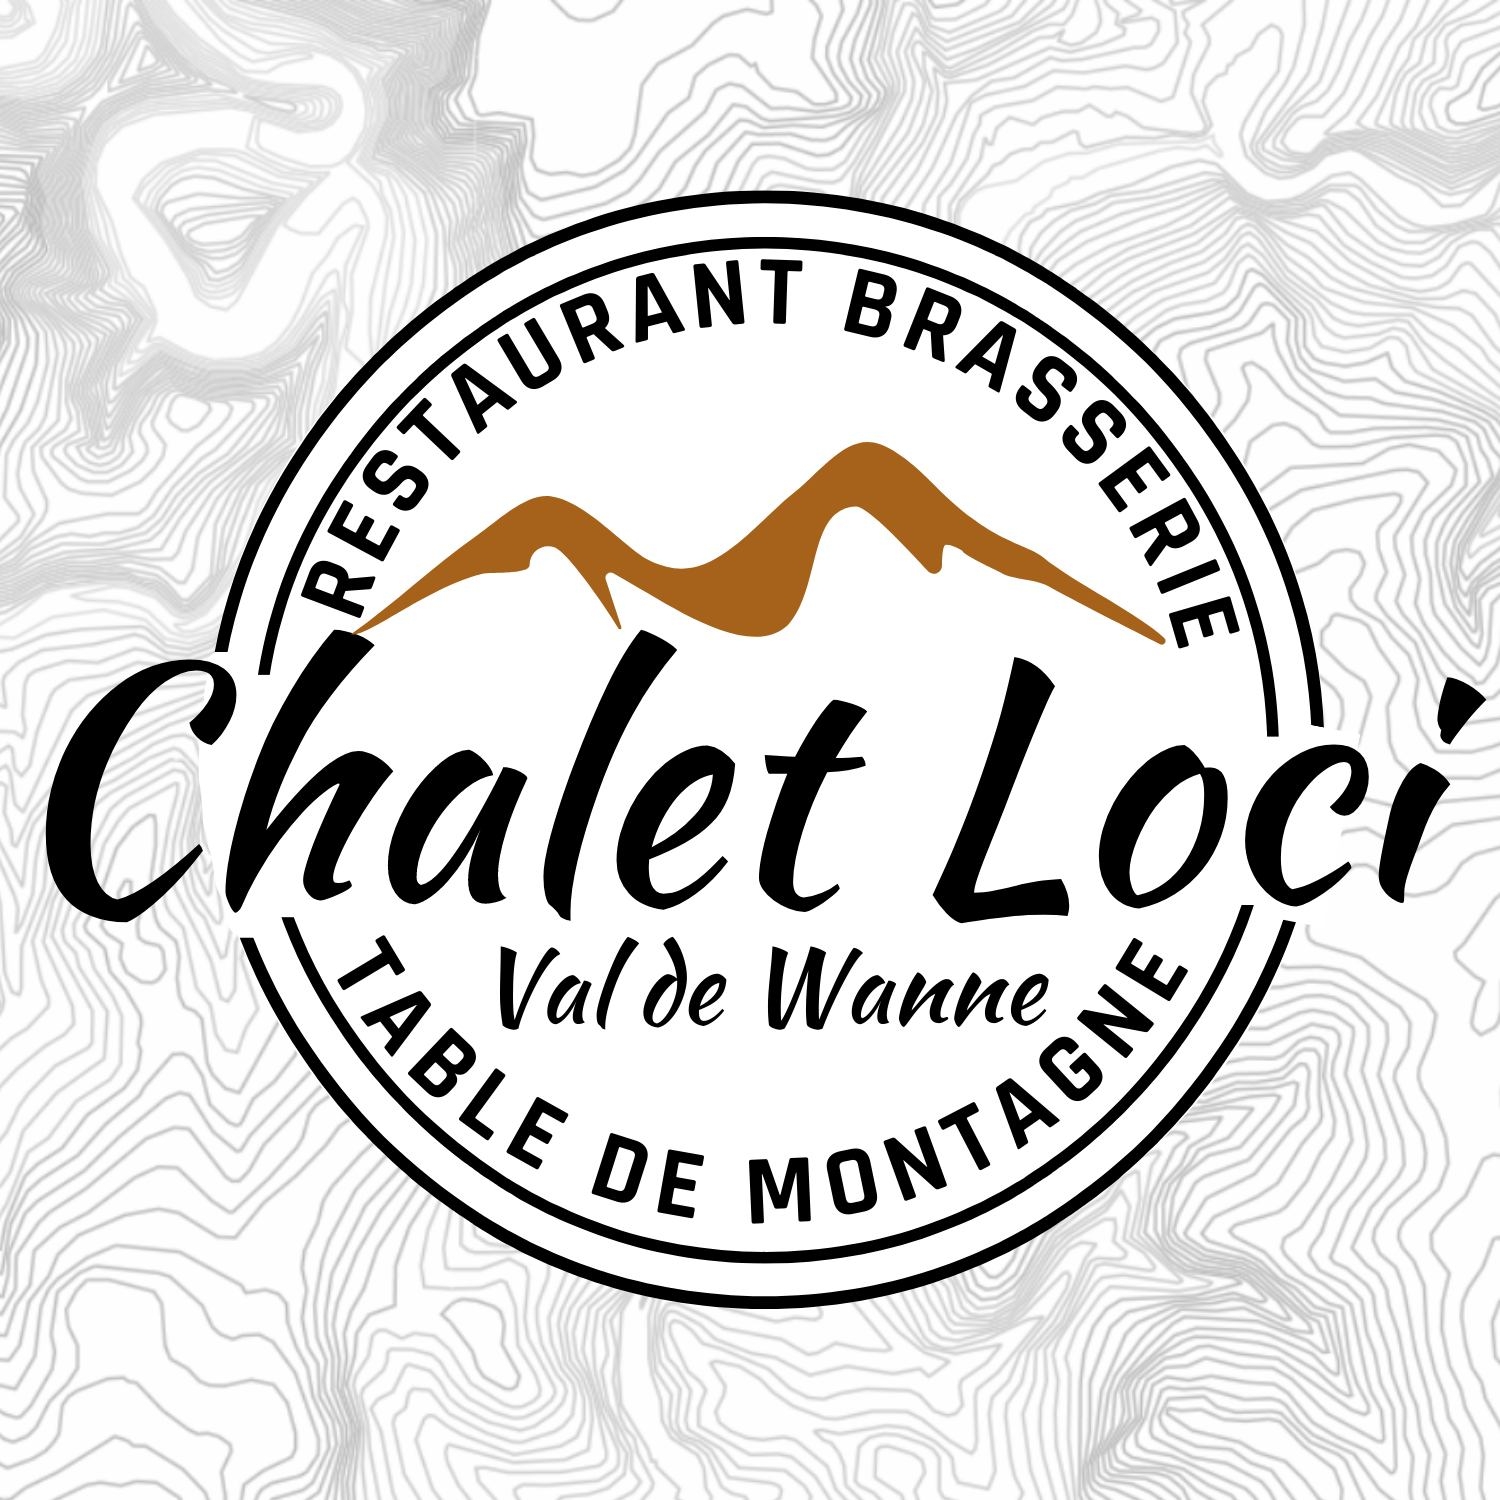 Chalets Loci - Val de Wanne